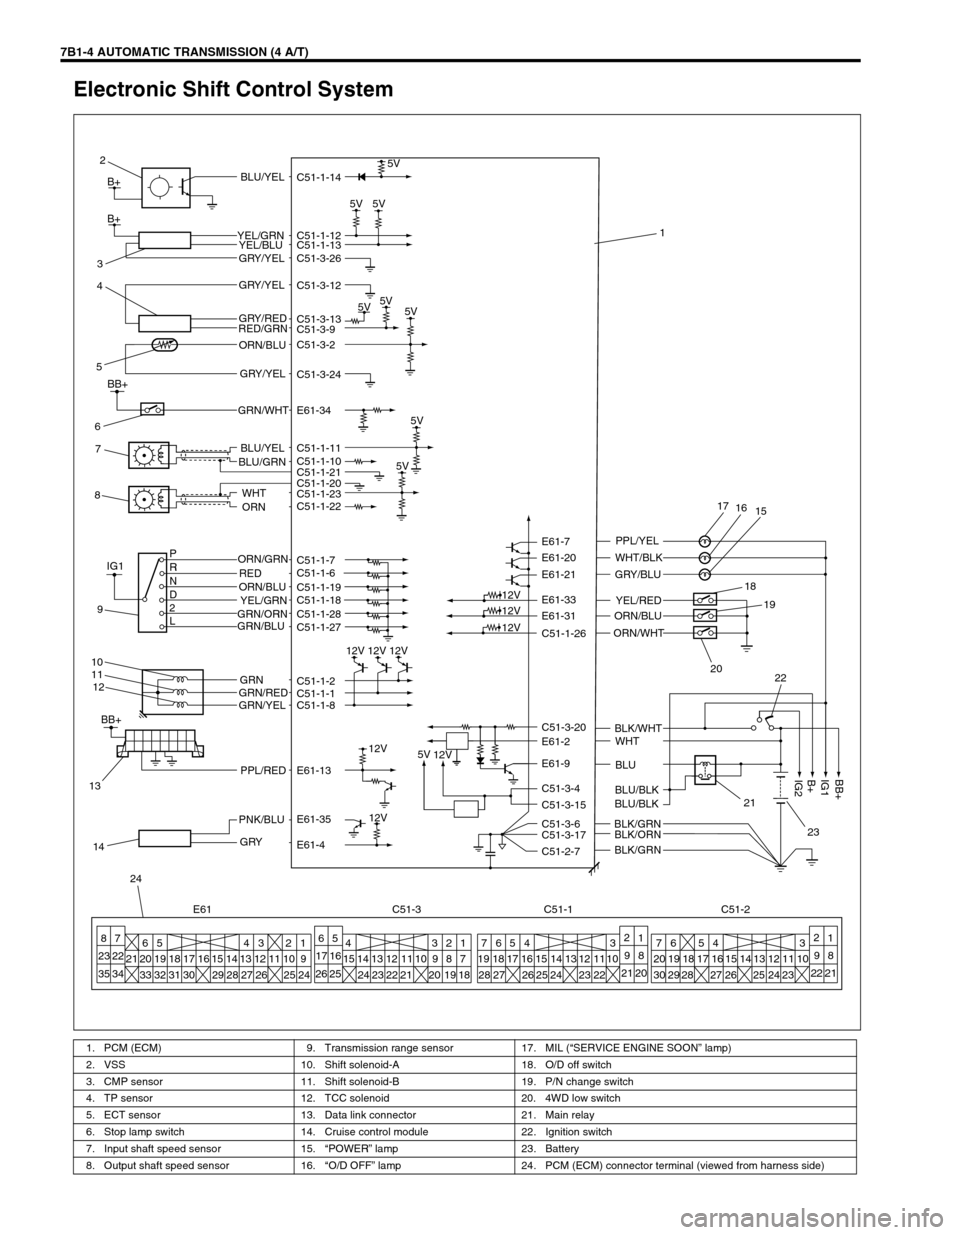 SUZUKI GRAND VITARA 1999 2.G Owners Manual 7B1-4 AUTOMATIC TRANSMISSION (4 A/T)
Electronic Shift Control System
1. PCM (ECM) 9. Transmission range sensor 17. MIL (“SERVICE ENGINE SOON” lamp)
2. VSS 10. Shift solenoid-A 18. O/D off switch
3